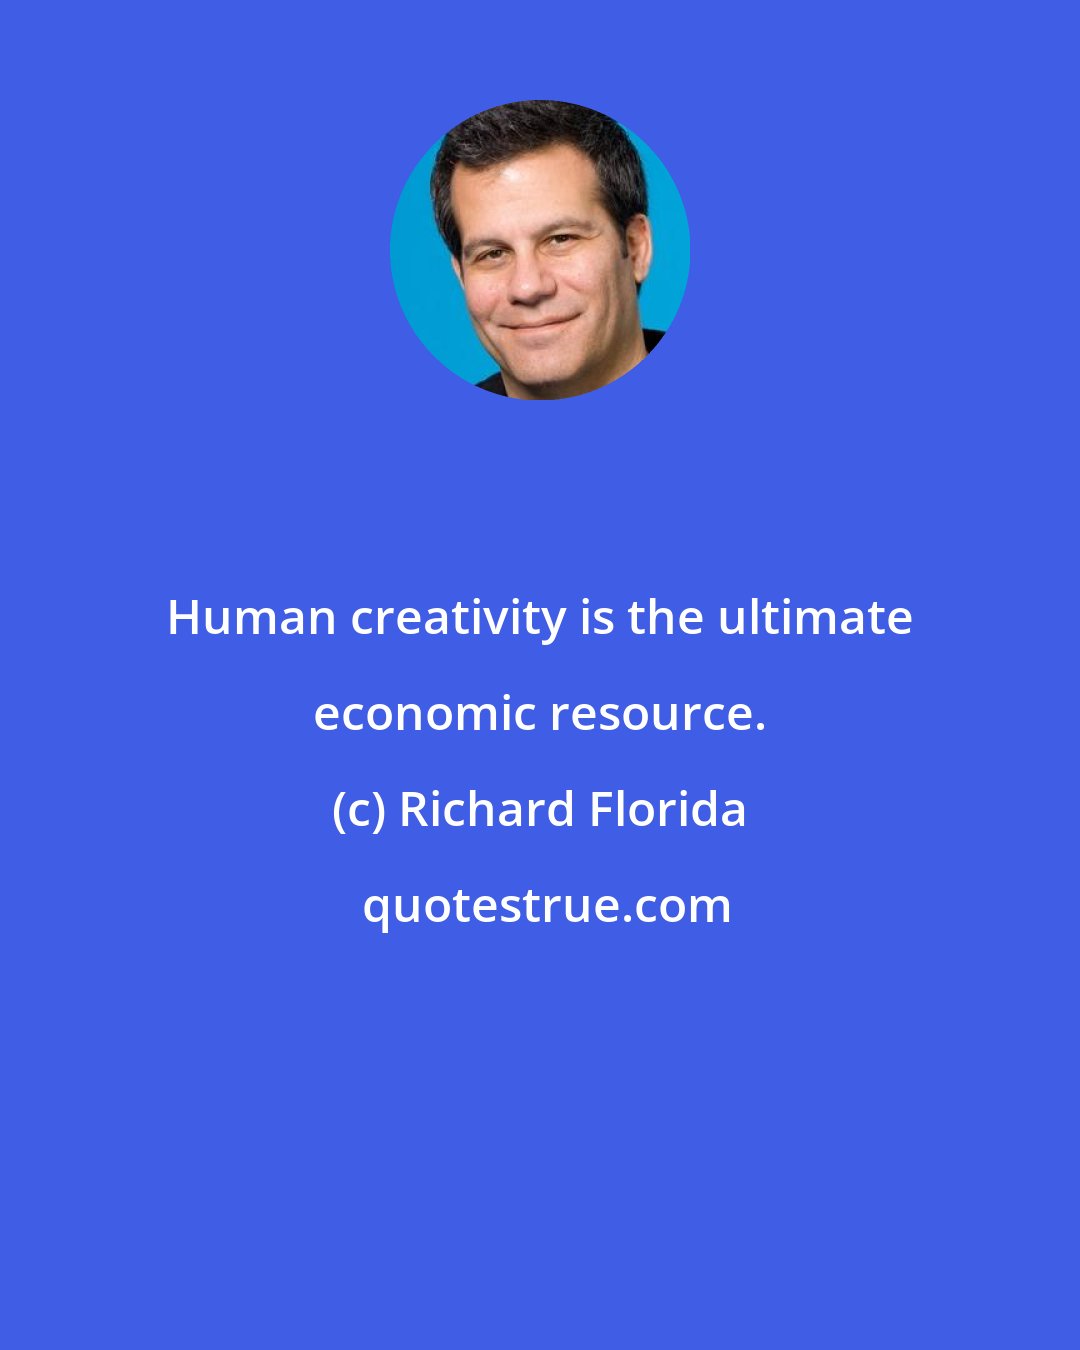 Richard Florida: Human creativity is the ultimate economic resource.